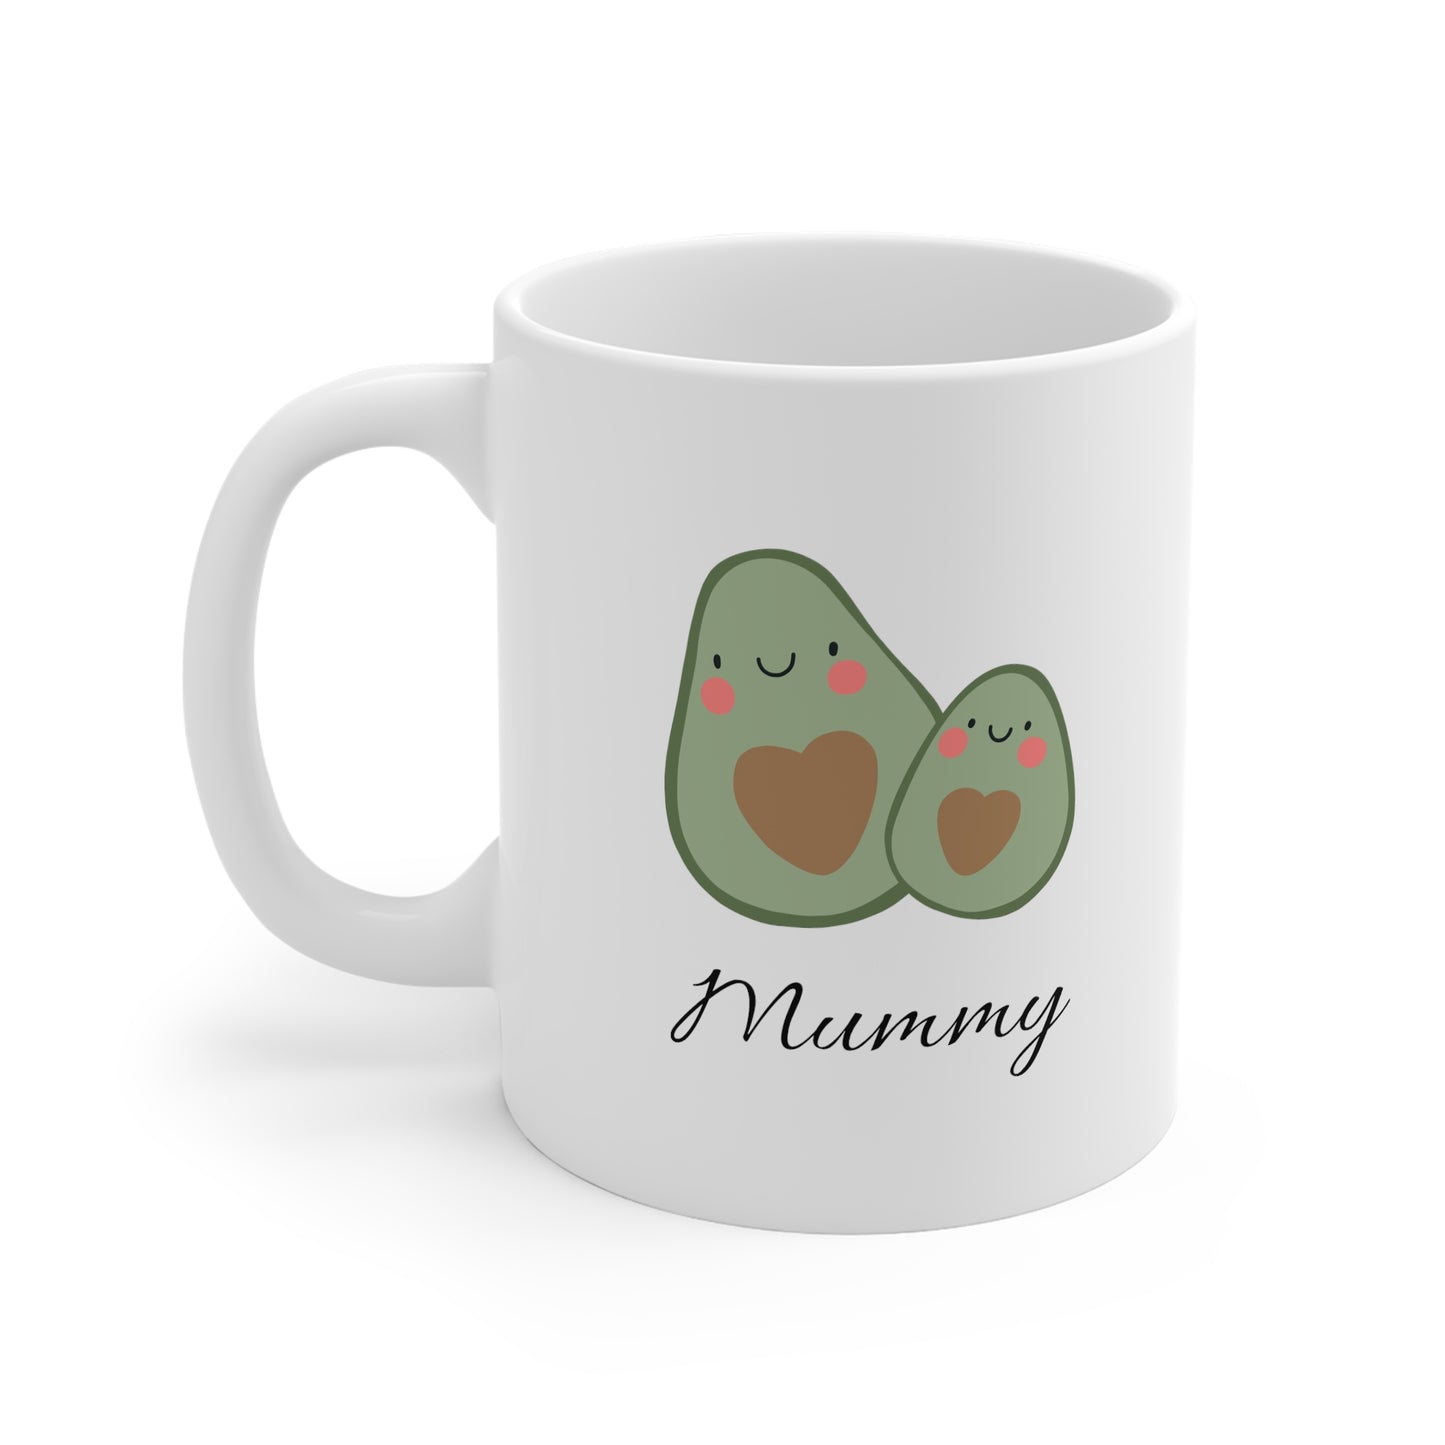 Avocado Mummy Mug